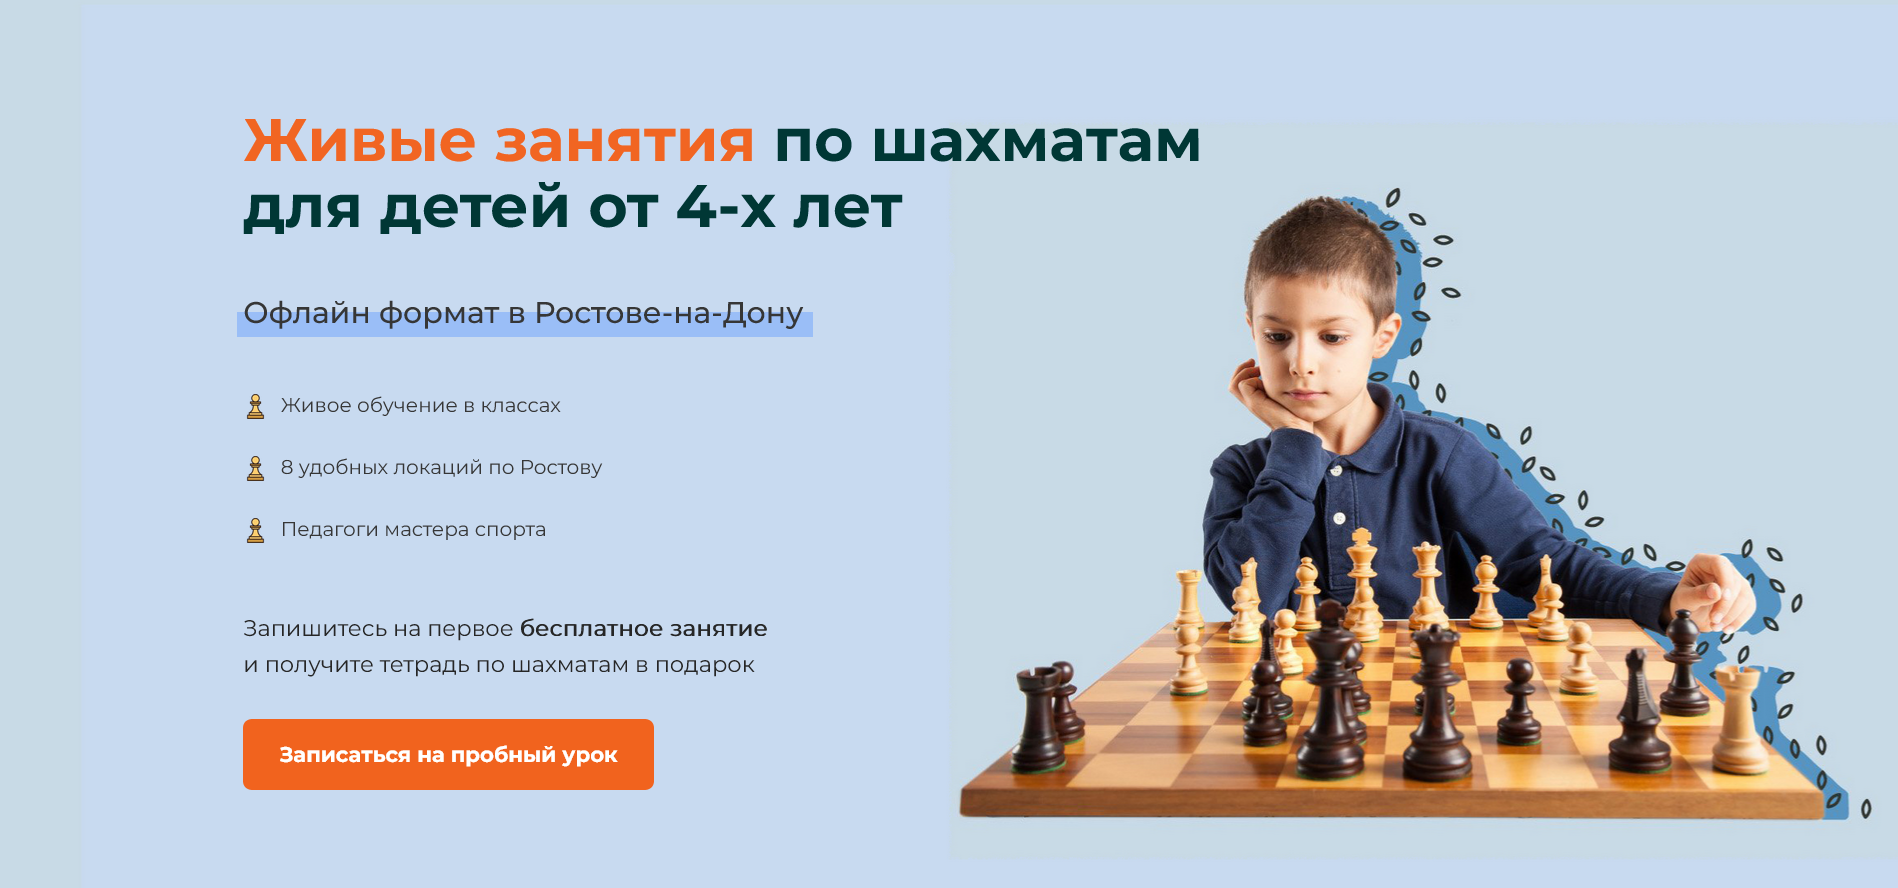 Реклама шахматного клуба для детей. Шахматы максимум. Преподаватель по шахматам